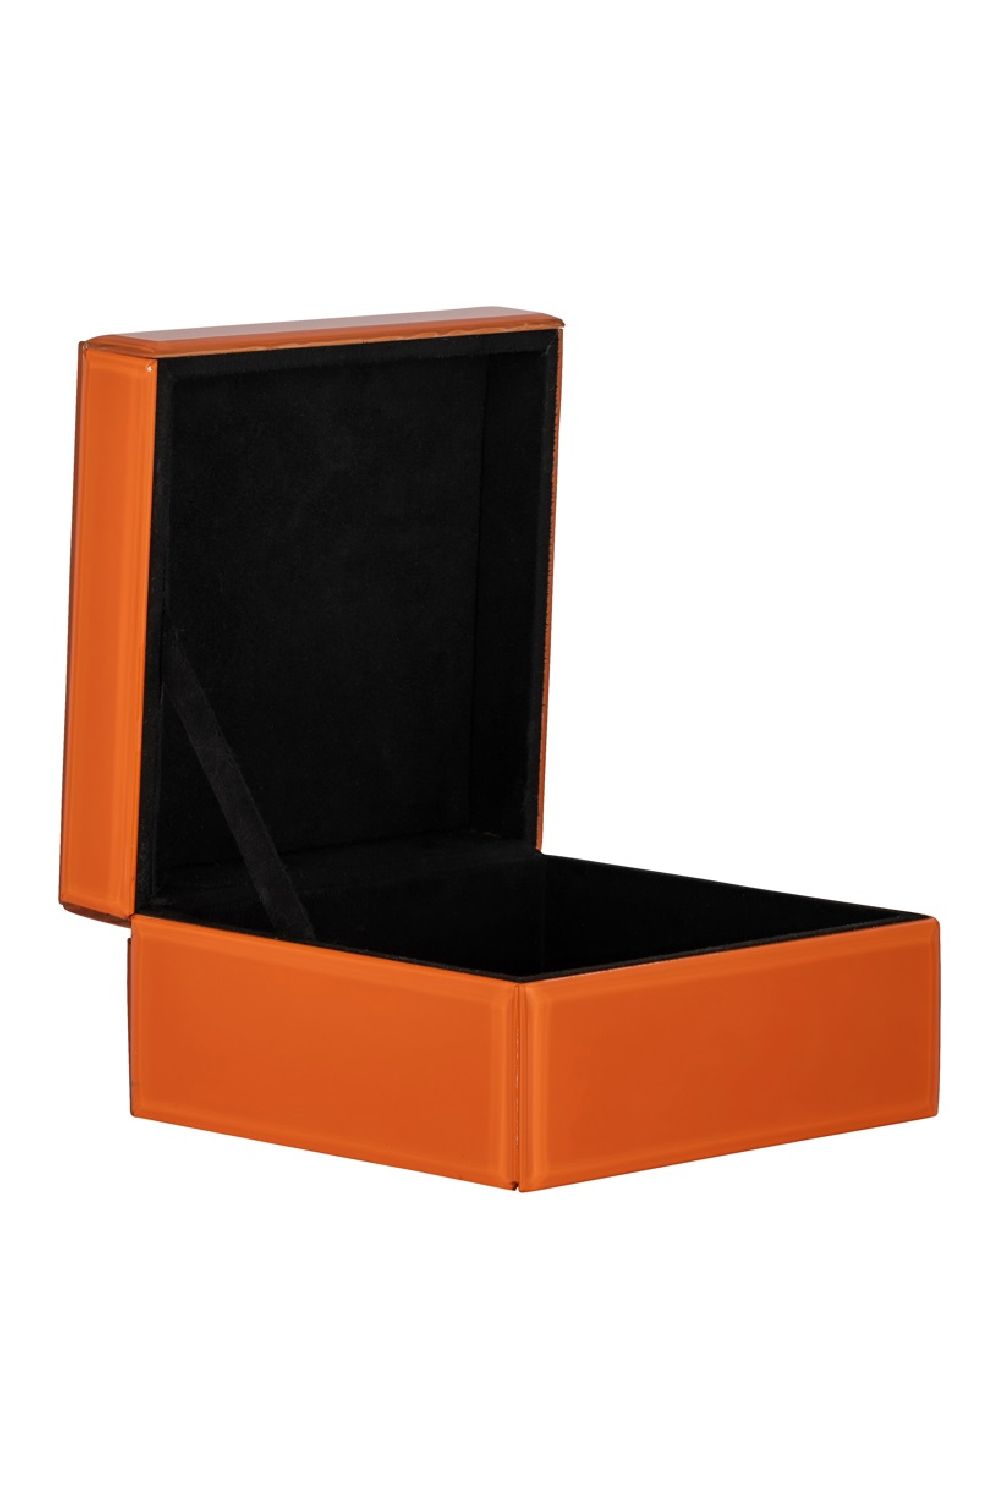 Orange Modern Storage Box | OROA Lunia | Oroa.com